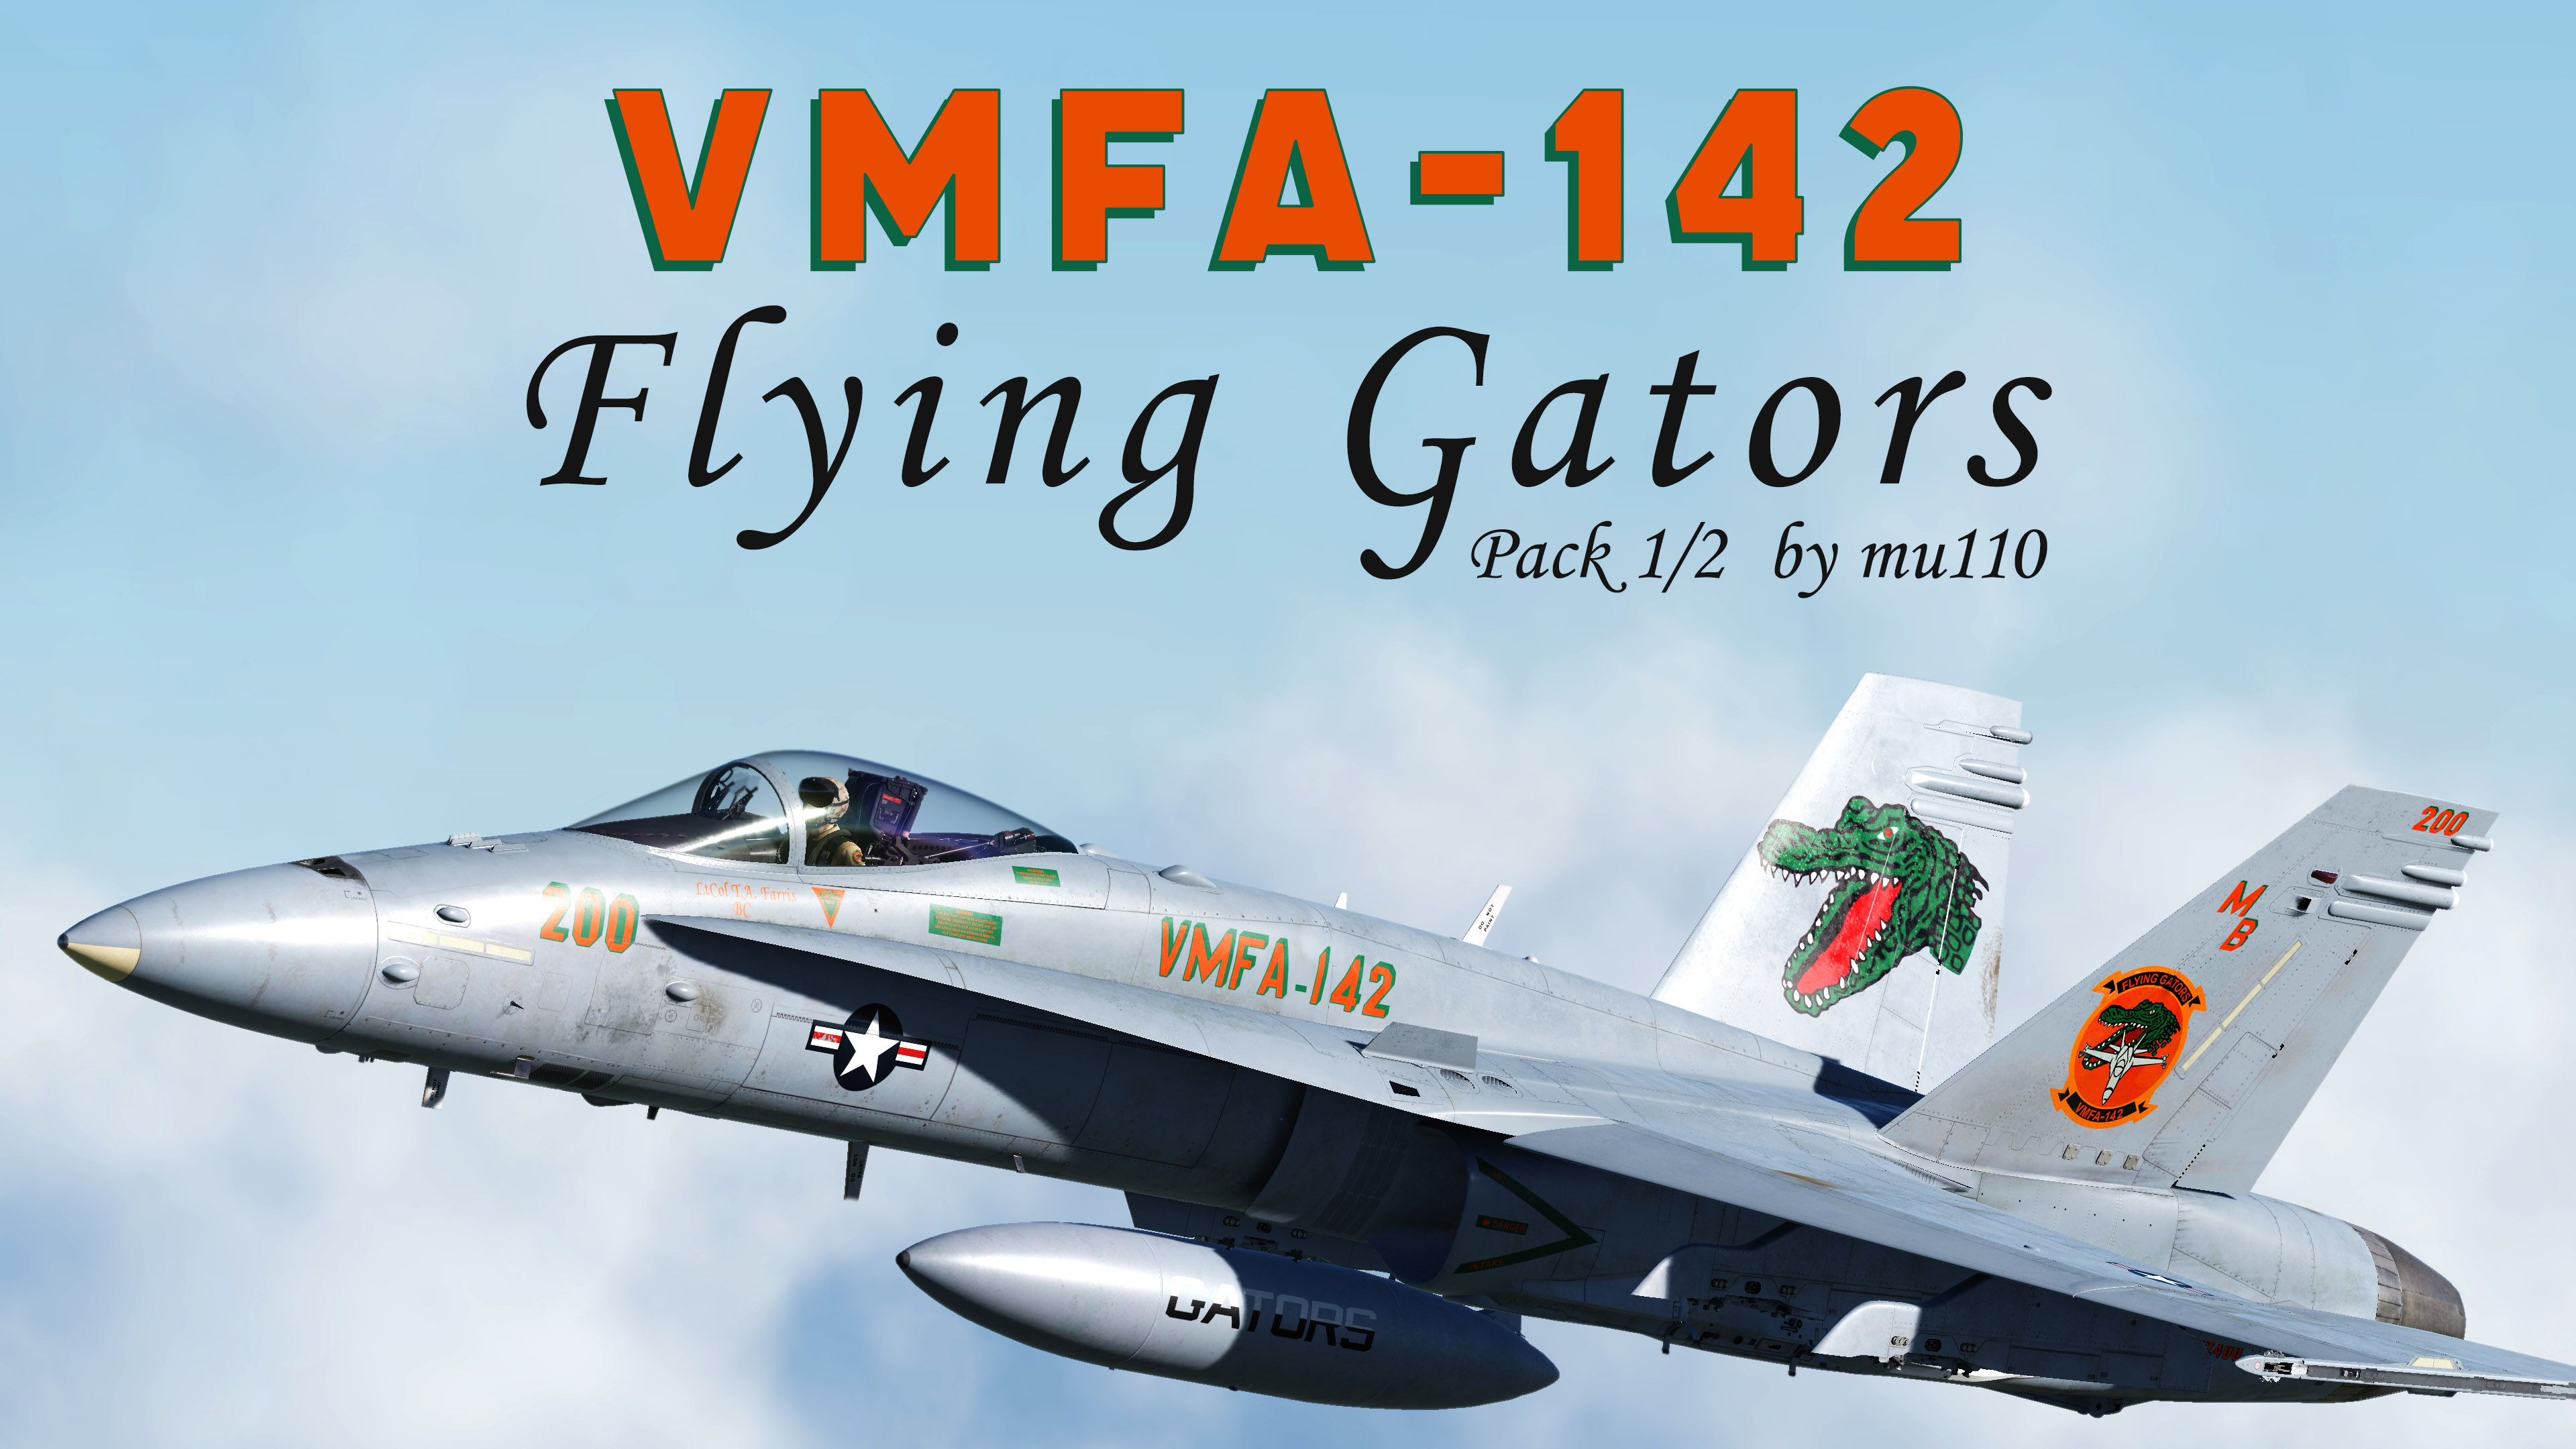 VMFA-142 "Flying Gators" Livery Pack 1 of 2!